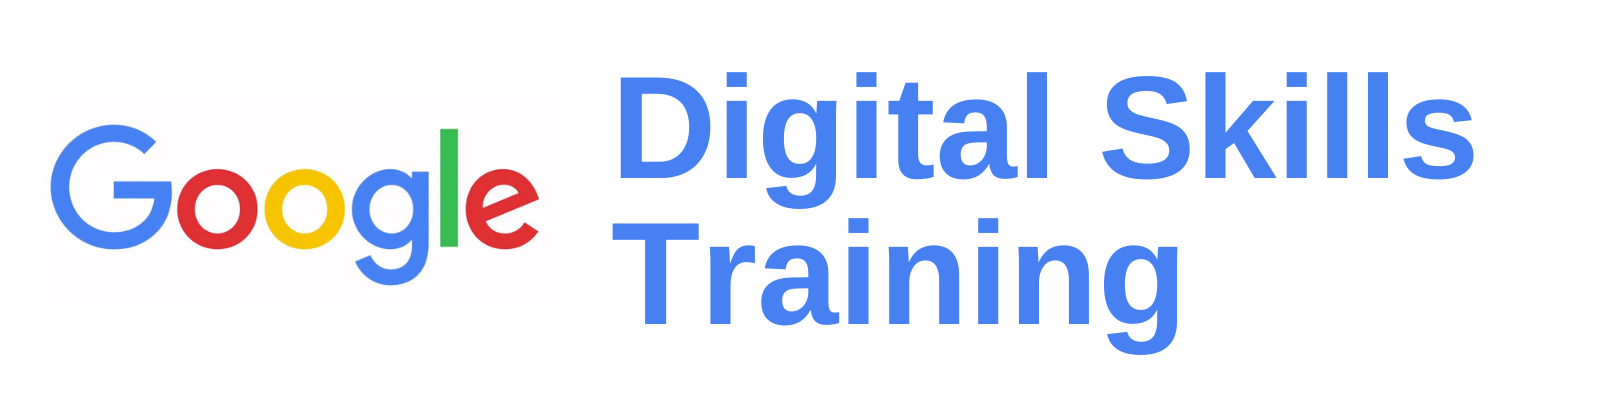 Google Digital Skills Training